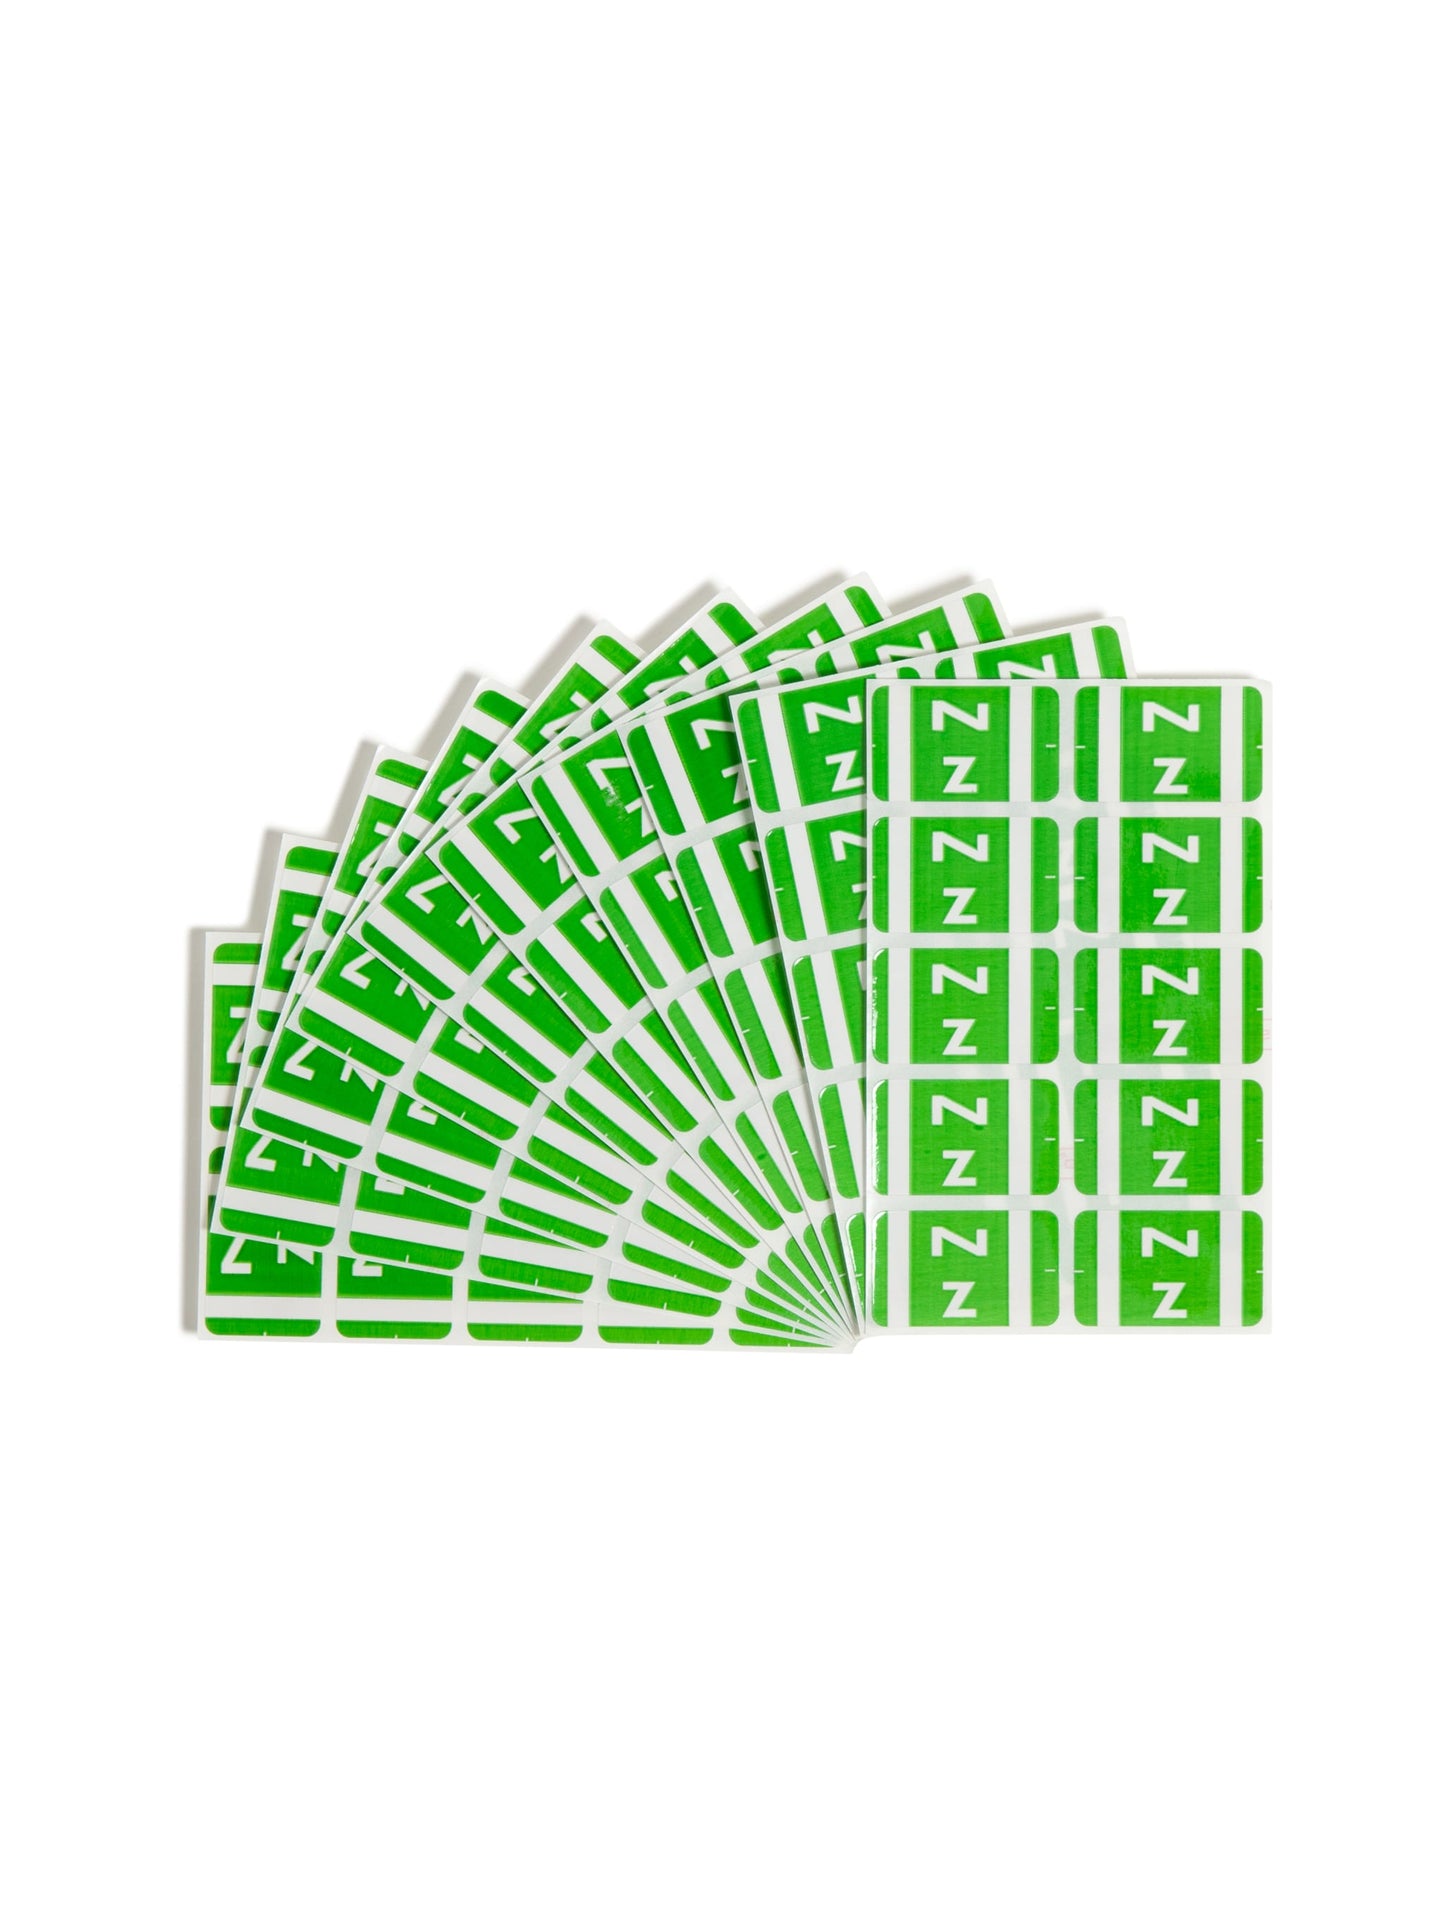 AlphaZ® ACCS Color Coded Alphabetic Labels - Sheets, Light Green Color, 1" X 1-5/8" Size, Set of 1, 086486671965